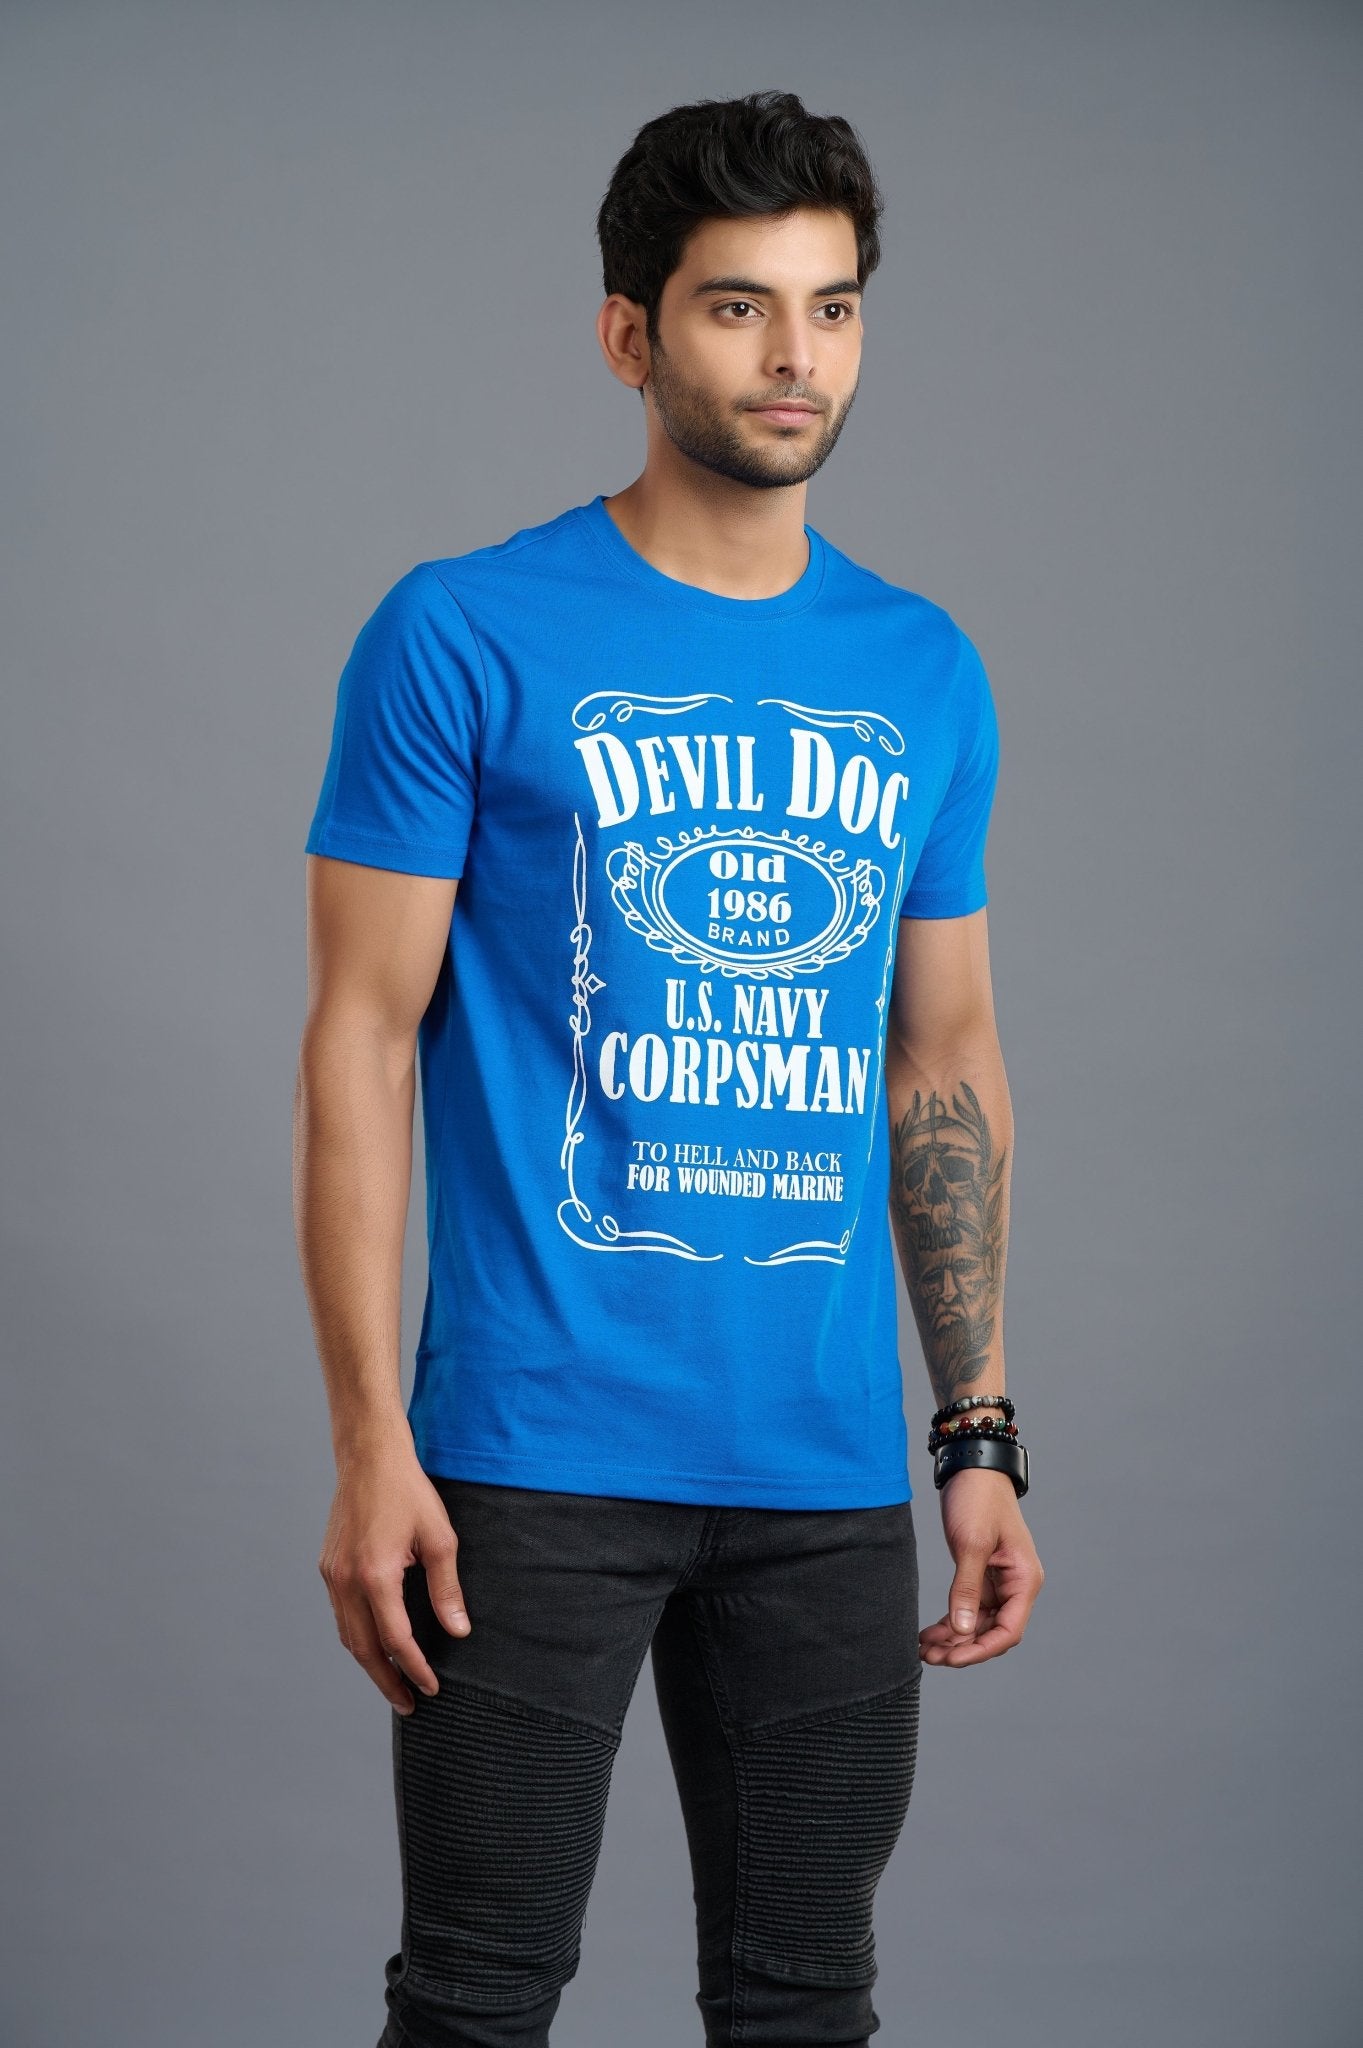 Devil Doc Printed Royal Blue T-Shirt for Men - Go Devil